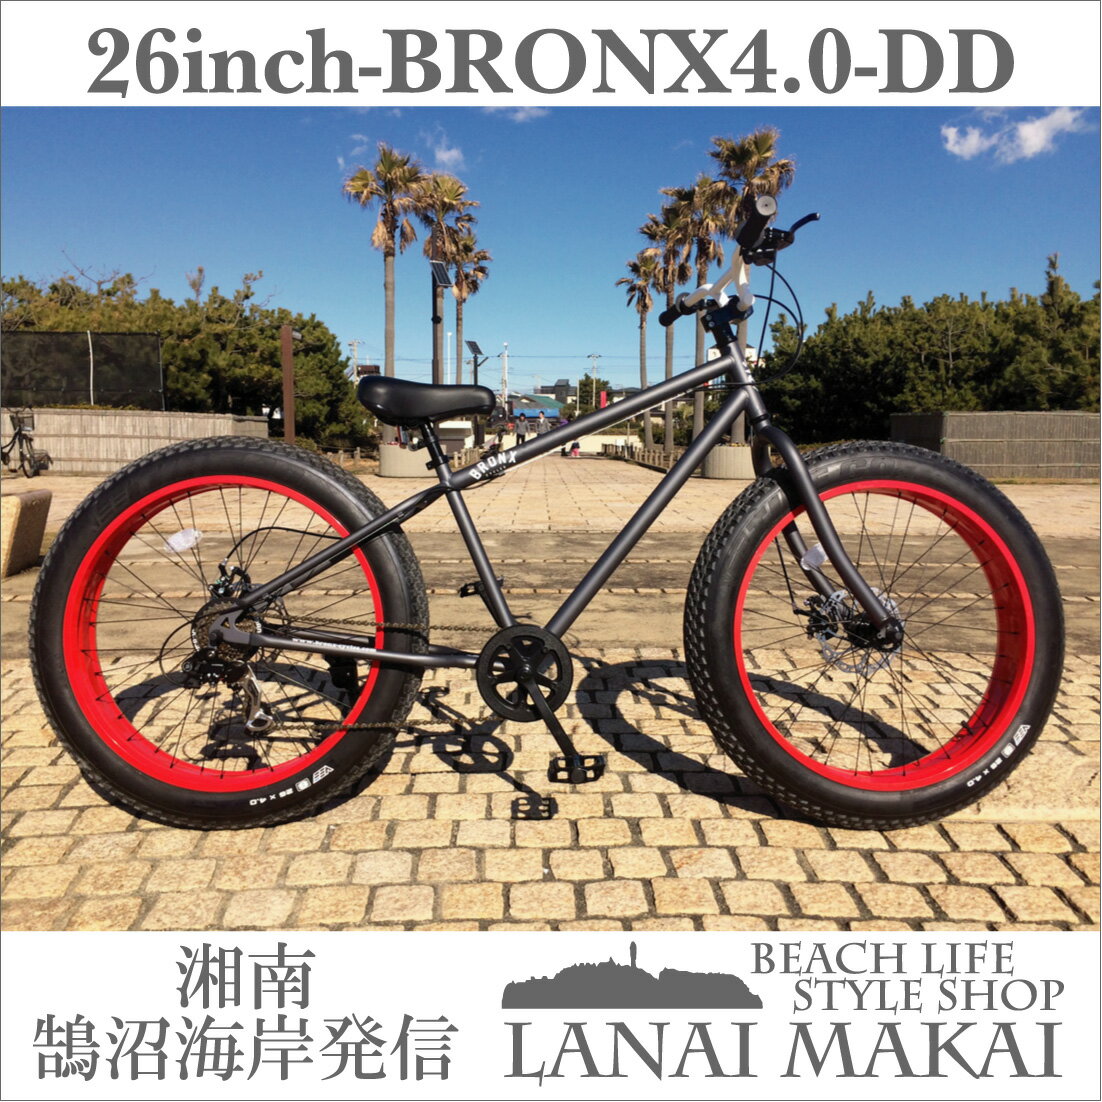 【MODEL】“26inch-BRONX4.0-DD FAT-BIKES”“湘南鵠沼海岸発…...:lanai-makai:10000530